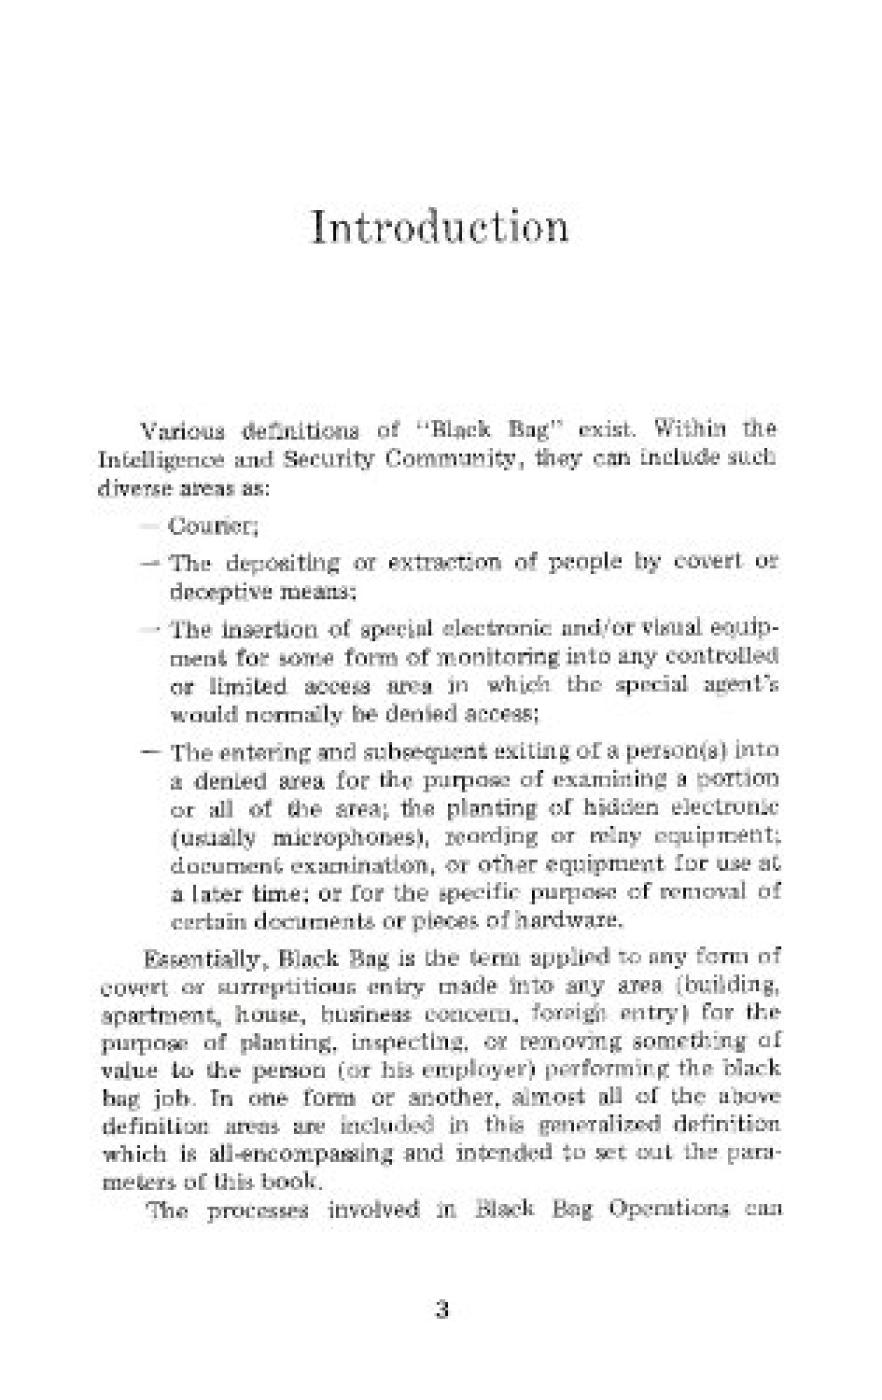 Agents Handbook of Black Bag Operations